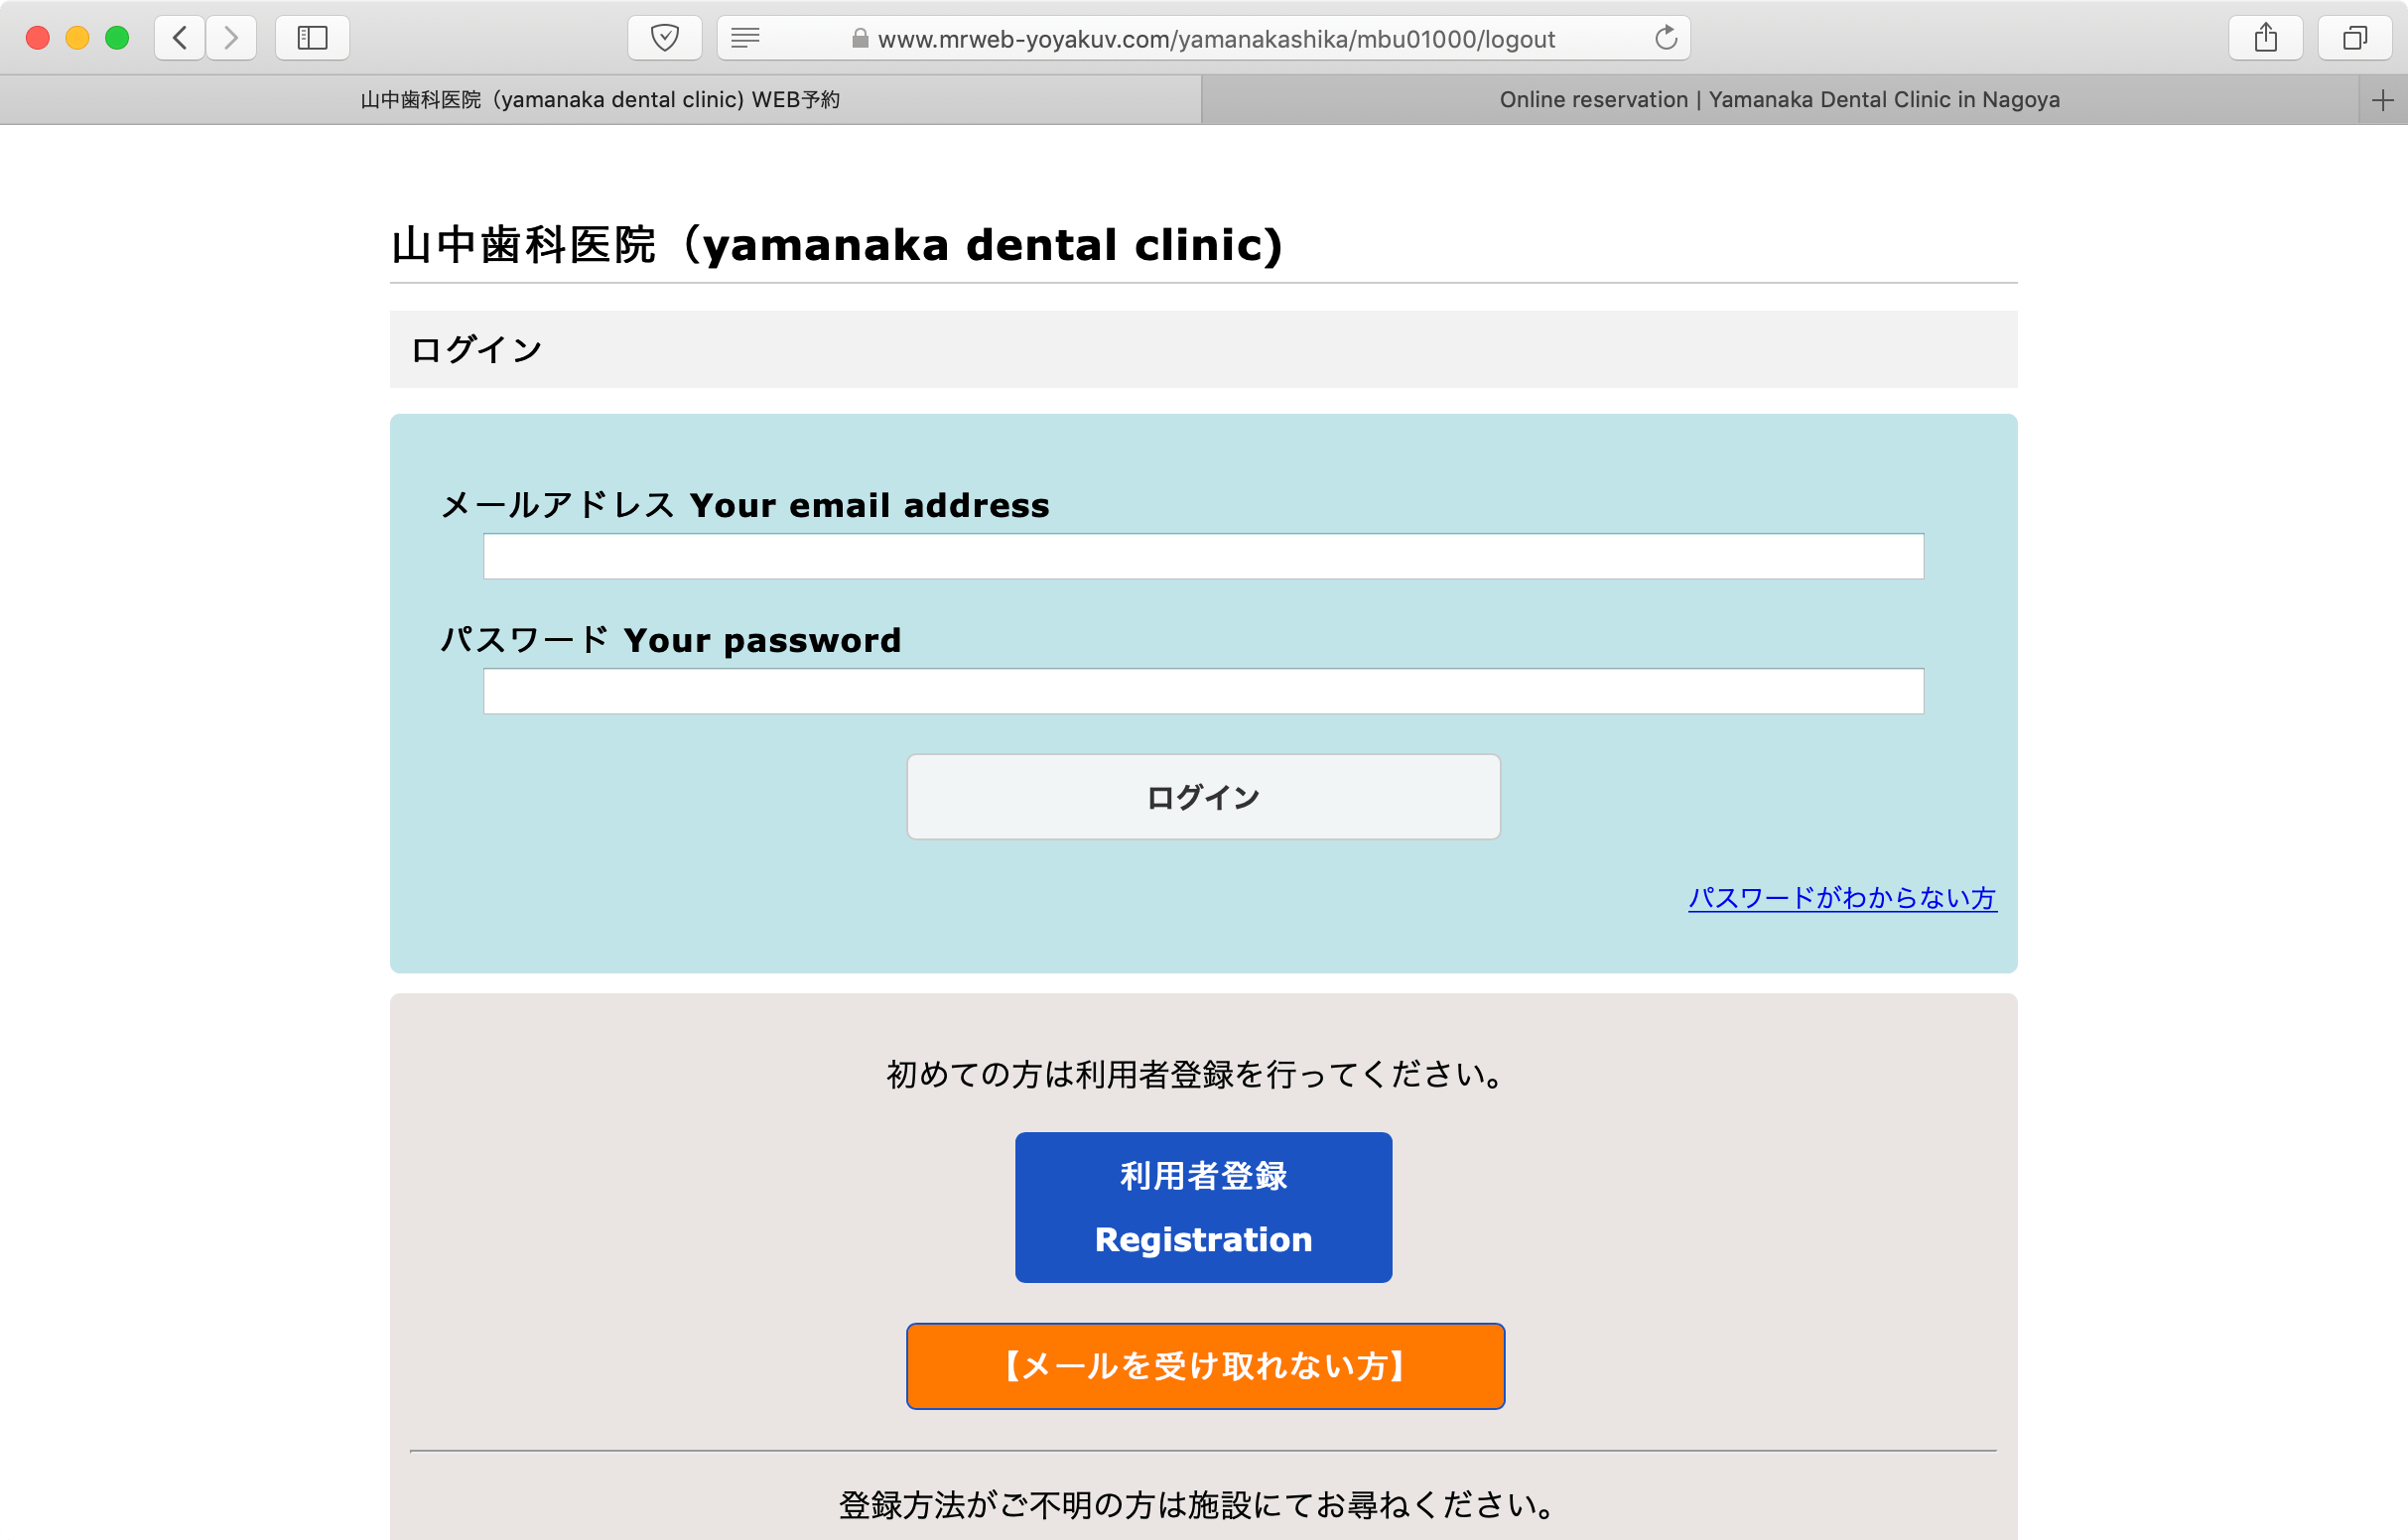 Screenshot of Yamanaka dental clinic online reservation login screen